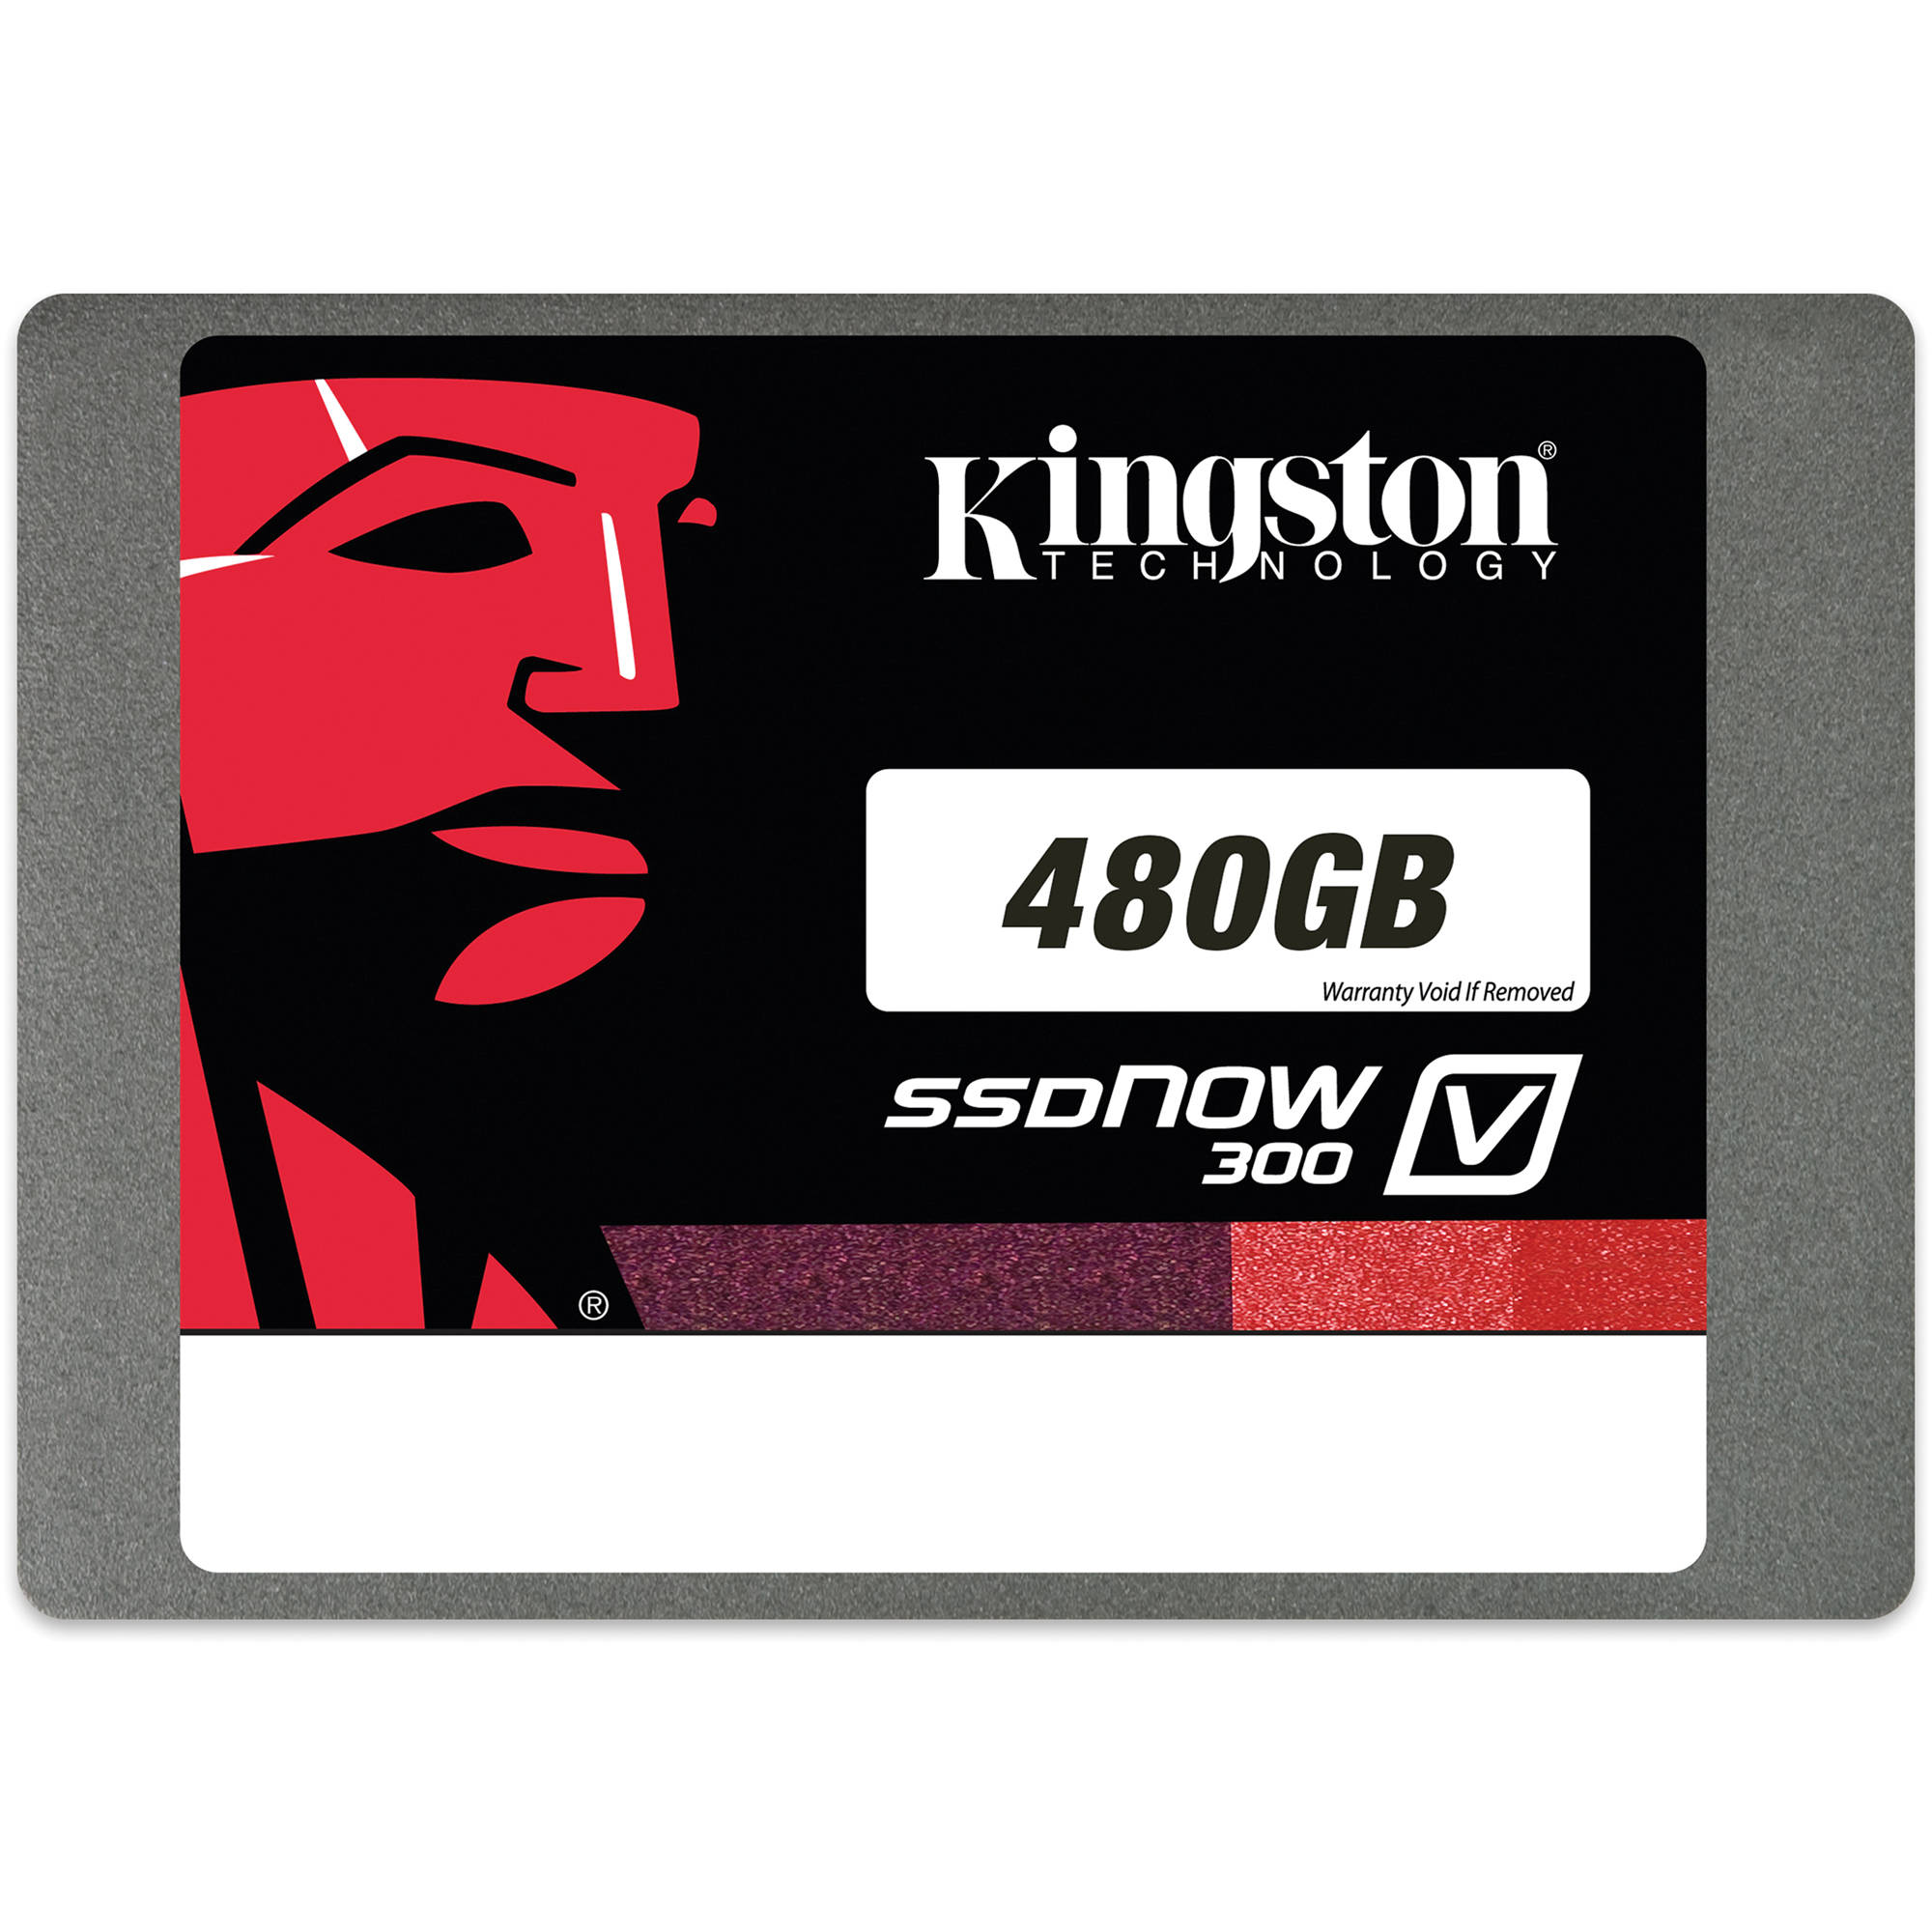 SSD KINGSTON SSDNow V300 480GB 2.5" SATA III MLC (SV300S37A/480G) в Киеве